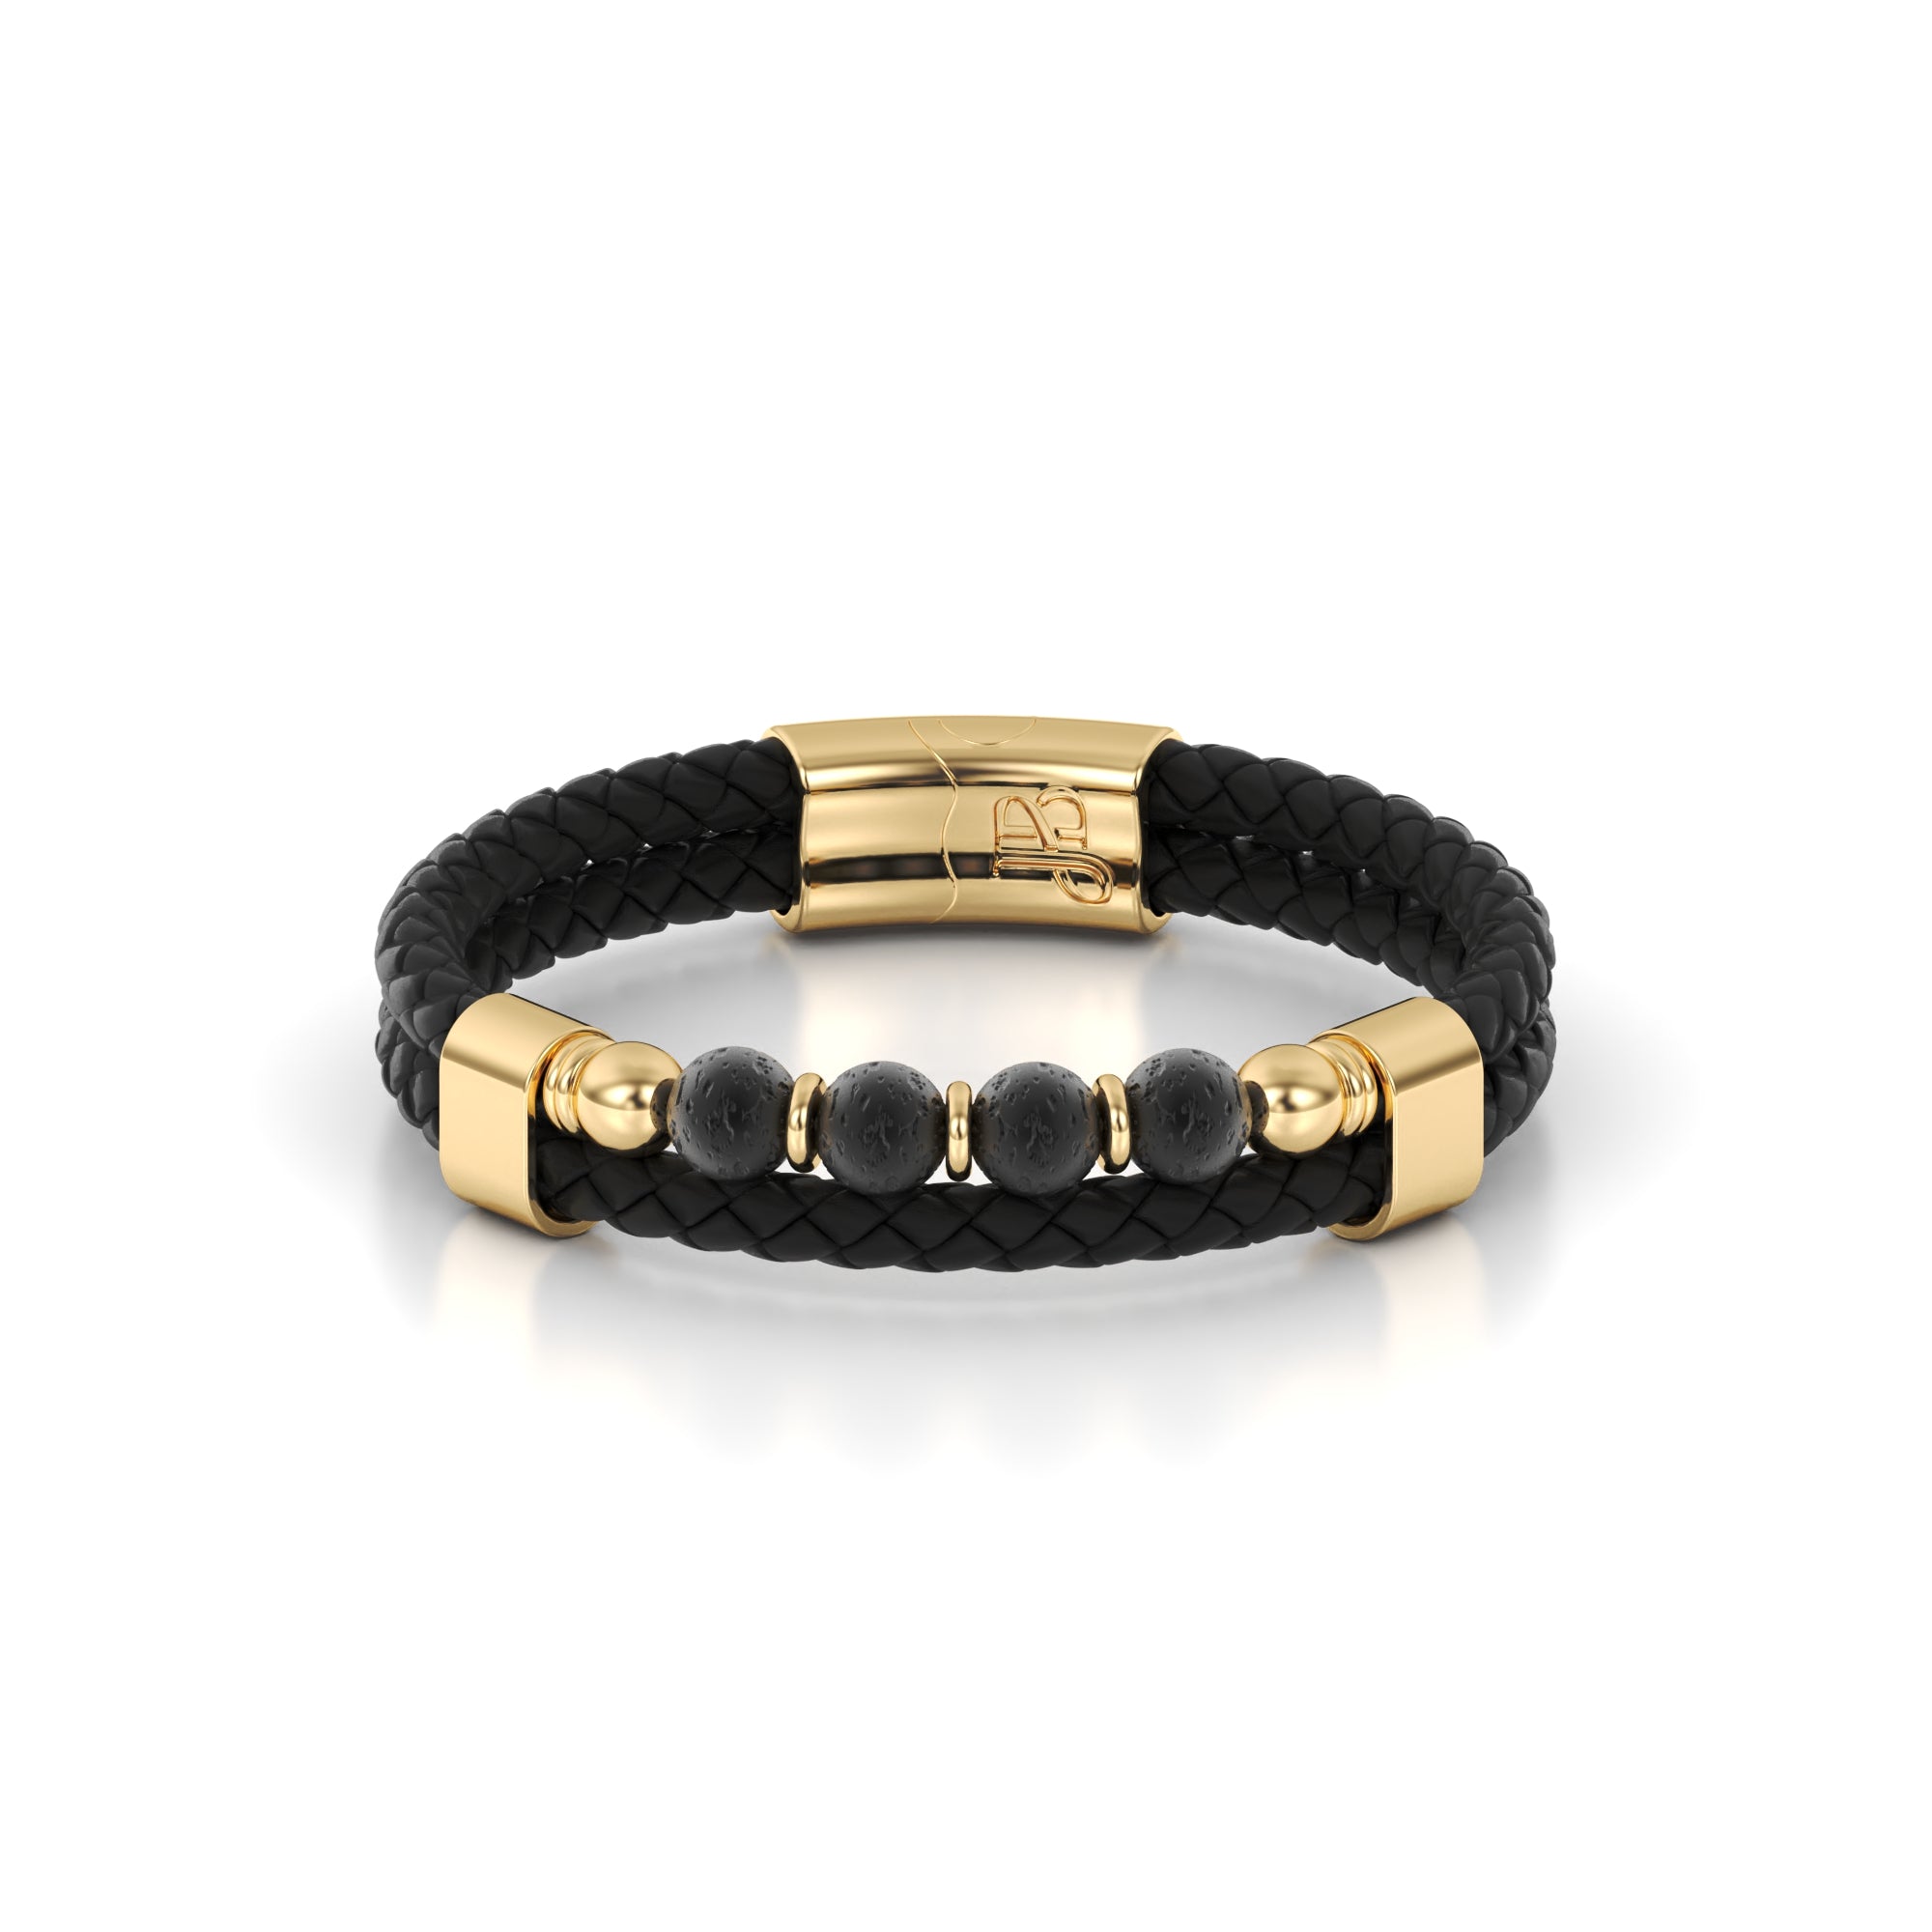 Black leather bracelet and lava rock beads